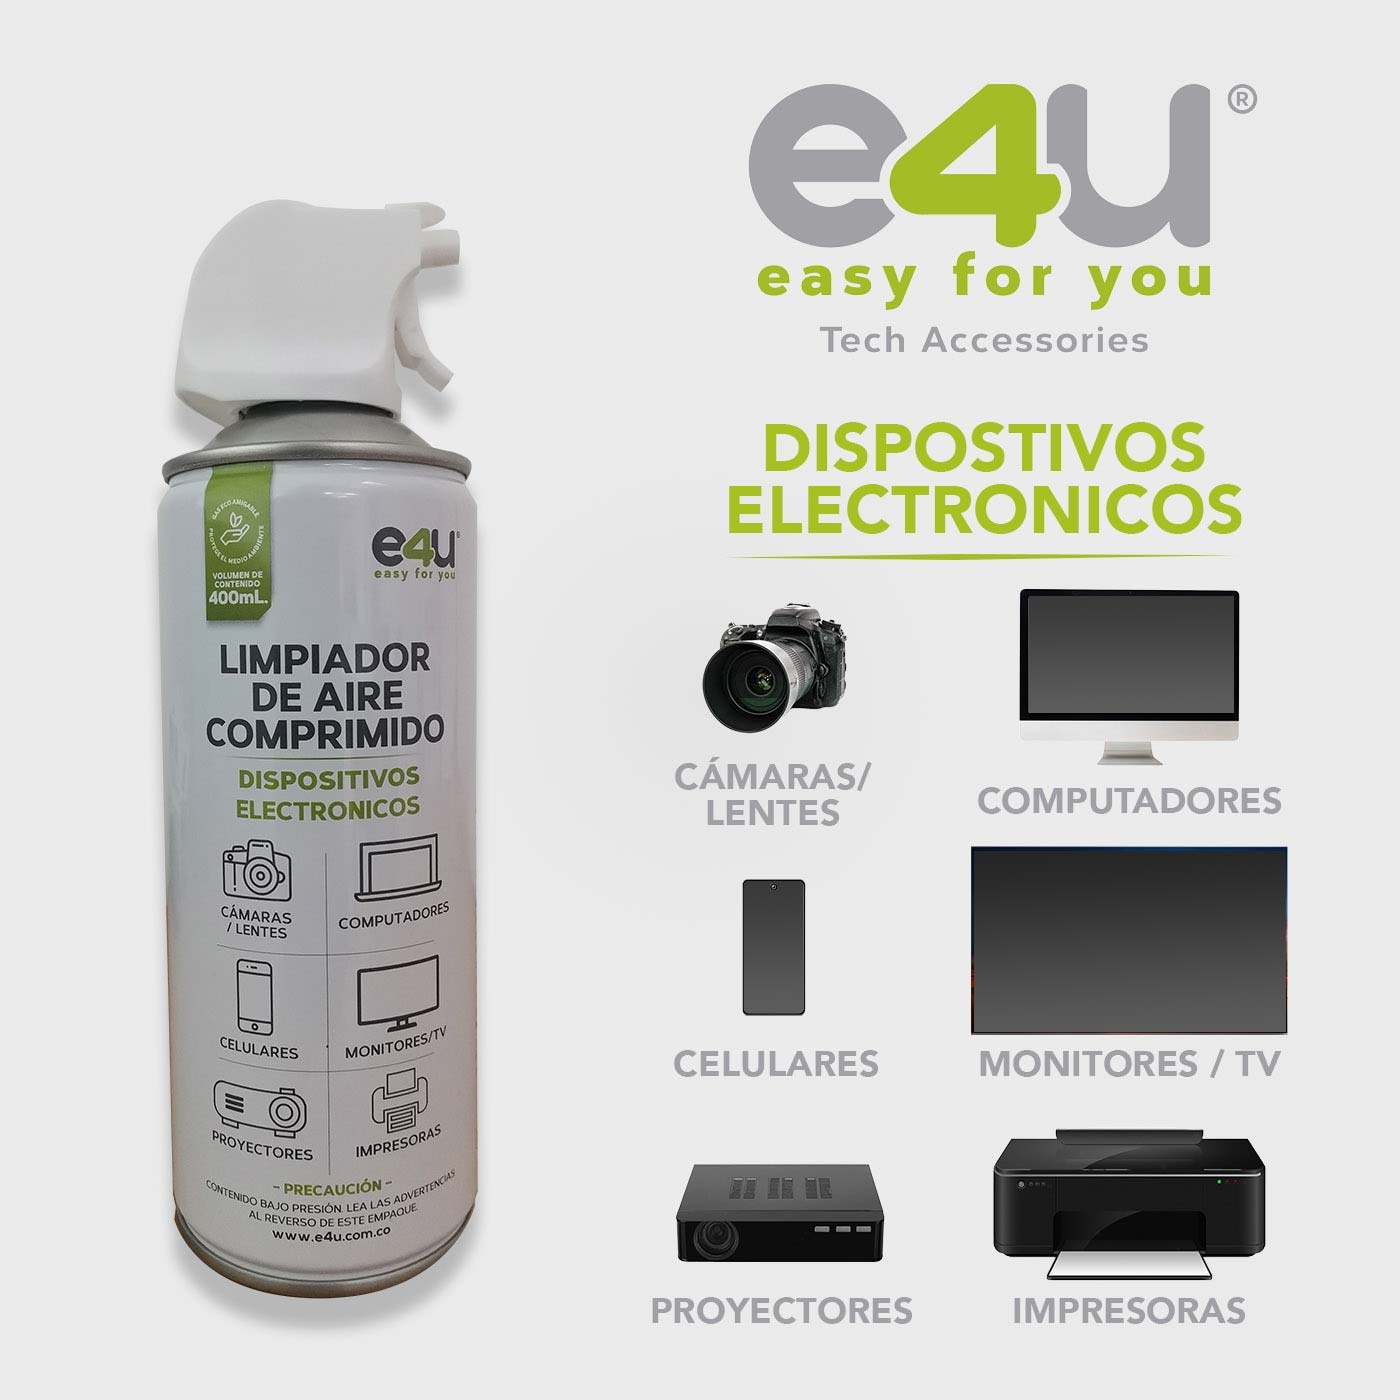 Limpiador E4U de Aire Comprimido para Dispositivos Electrónicos.